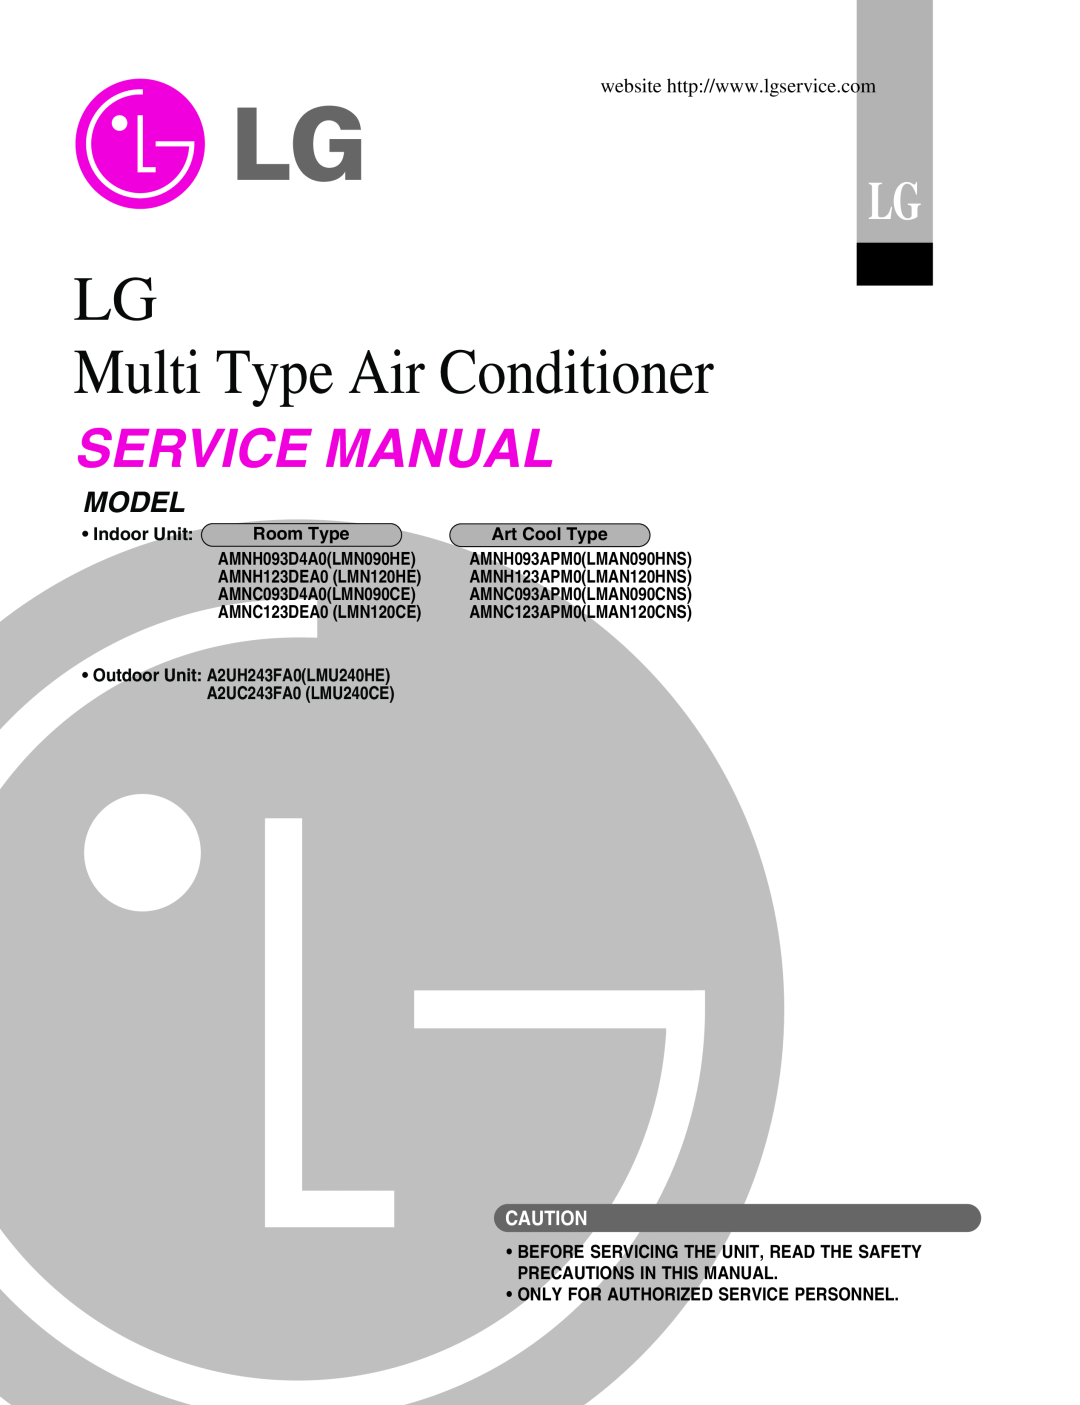 LG Electronics A2UC243FA0 (LMU240CE) service manual Multi Type Air Conditioner, Service Manual, Model, Indoor Unit 